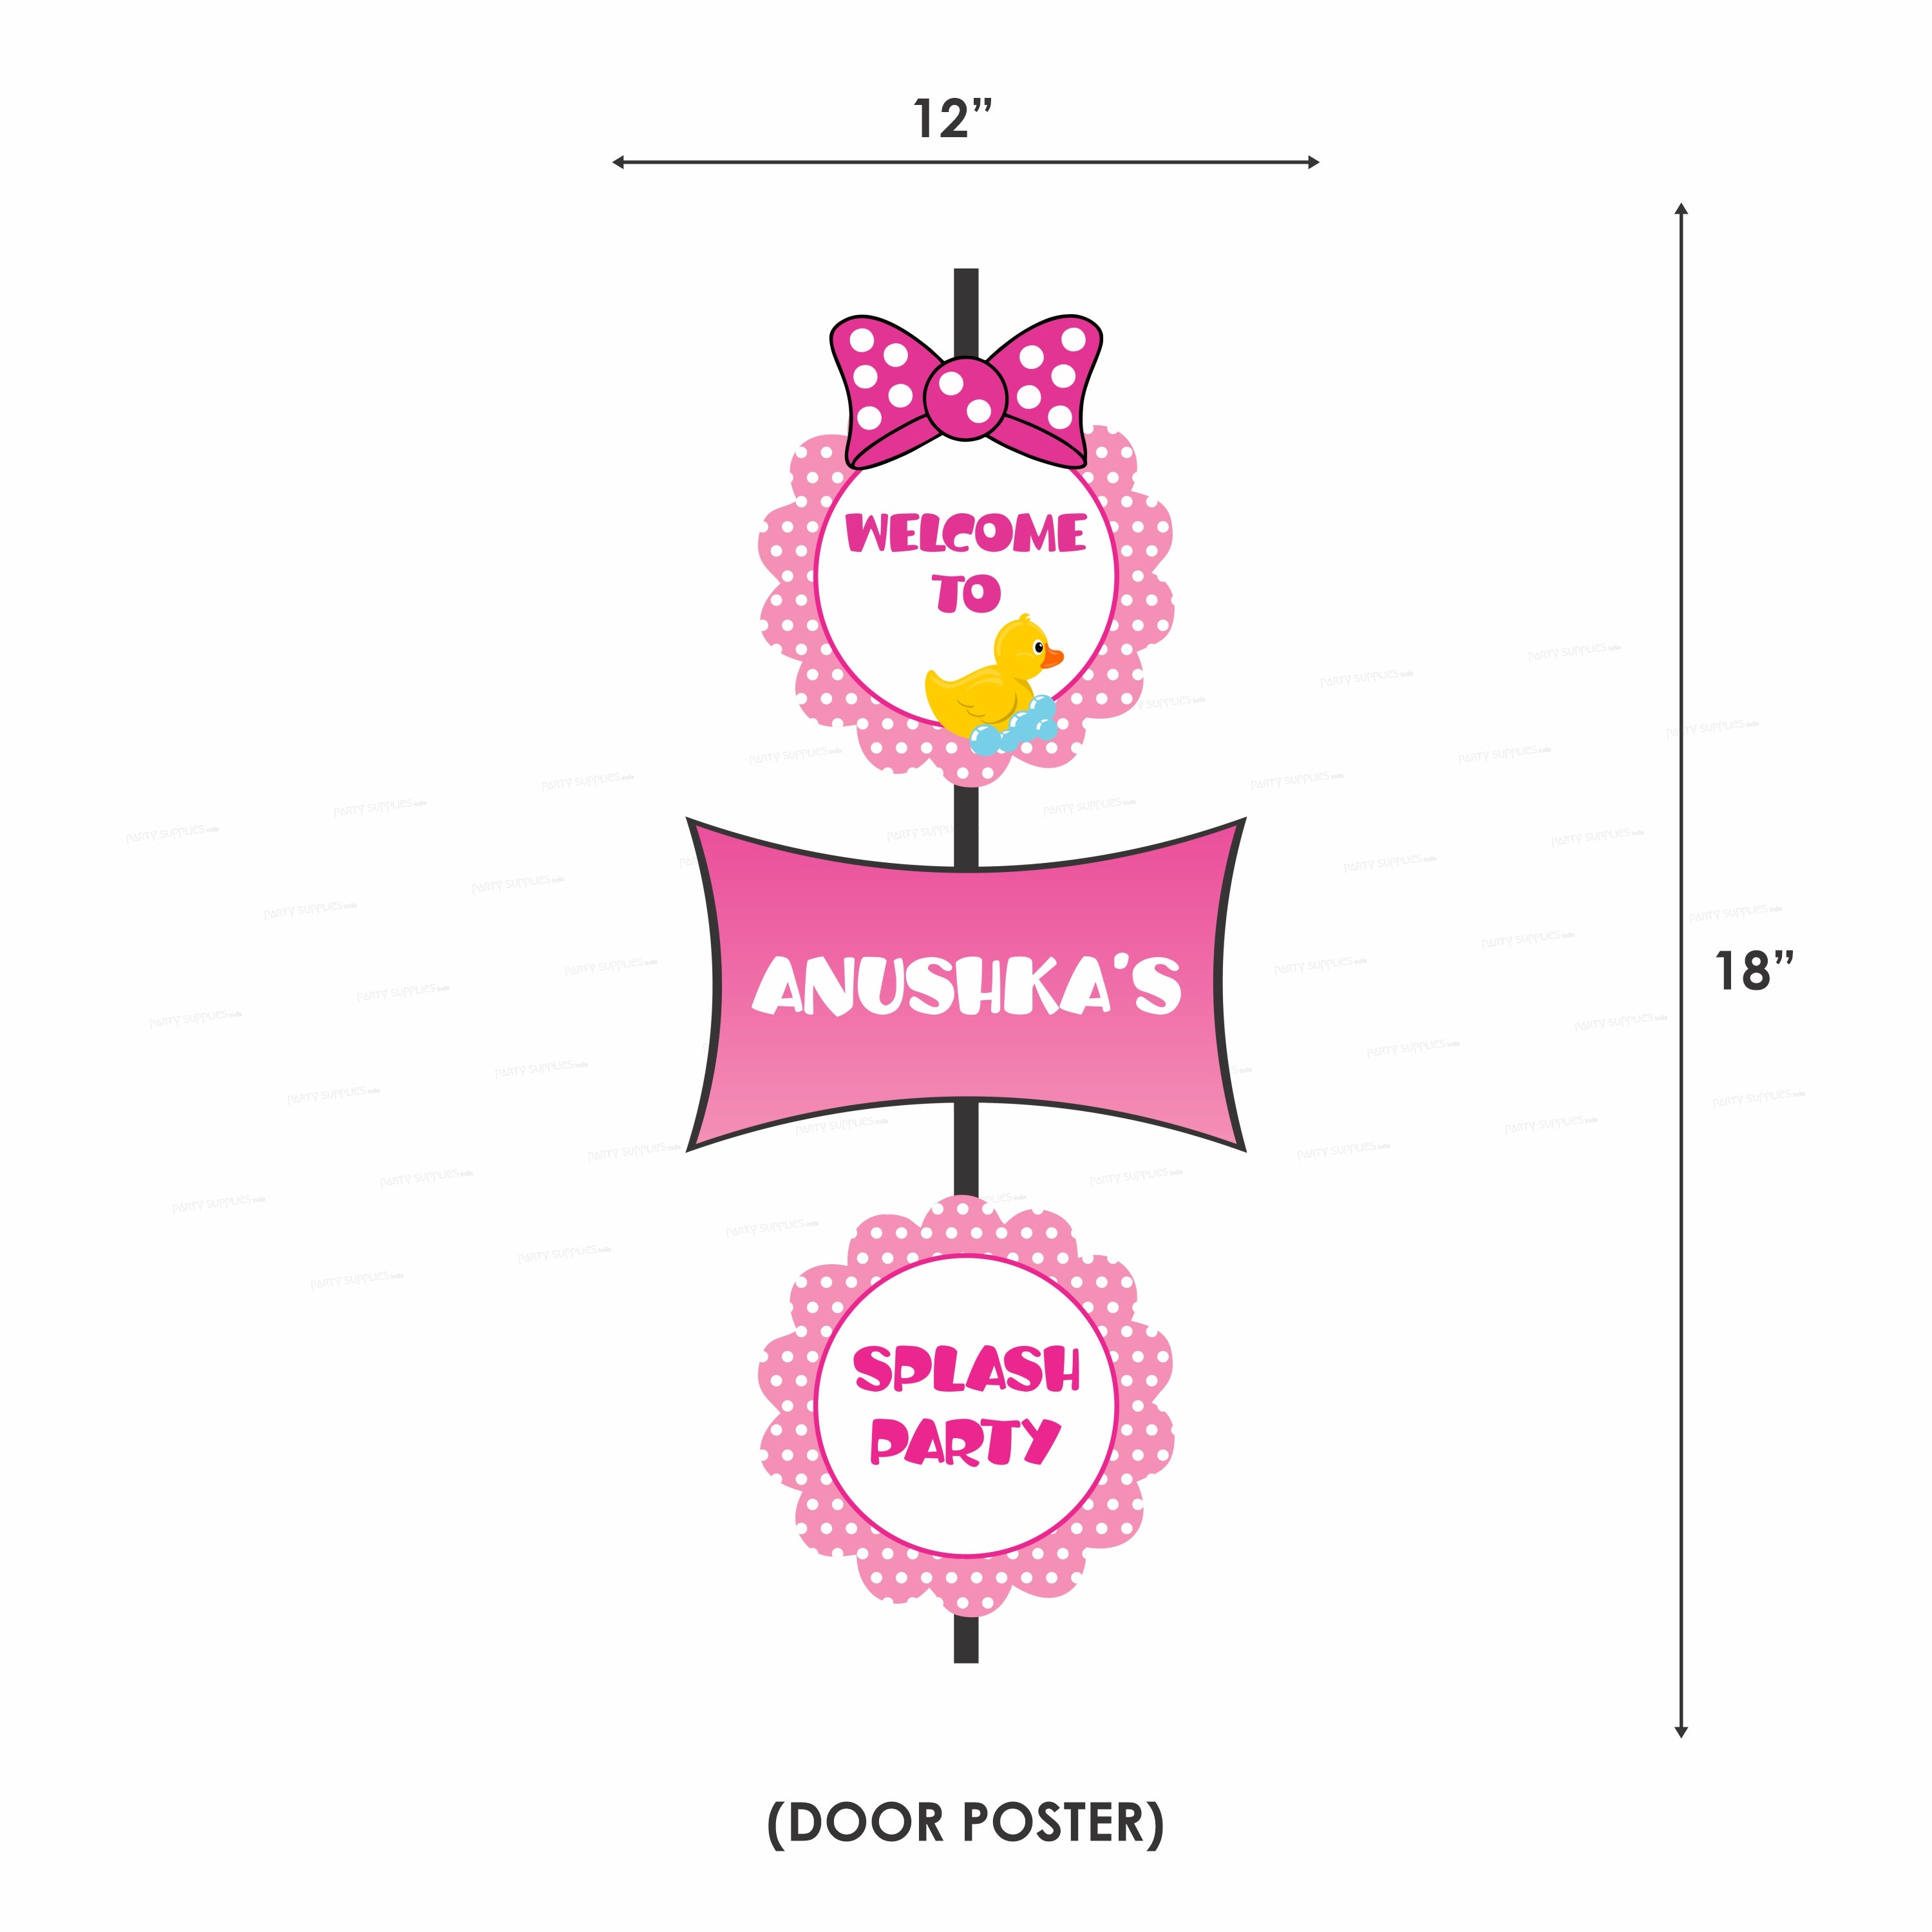 PSI Duck Girl Theme Exclusive Kit